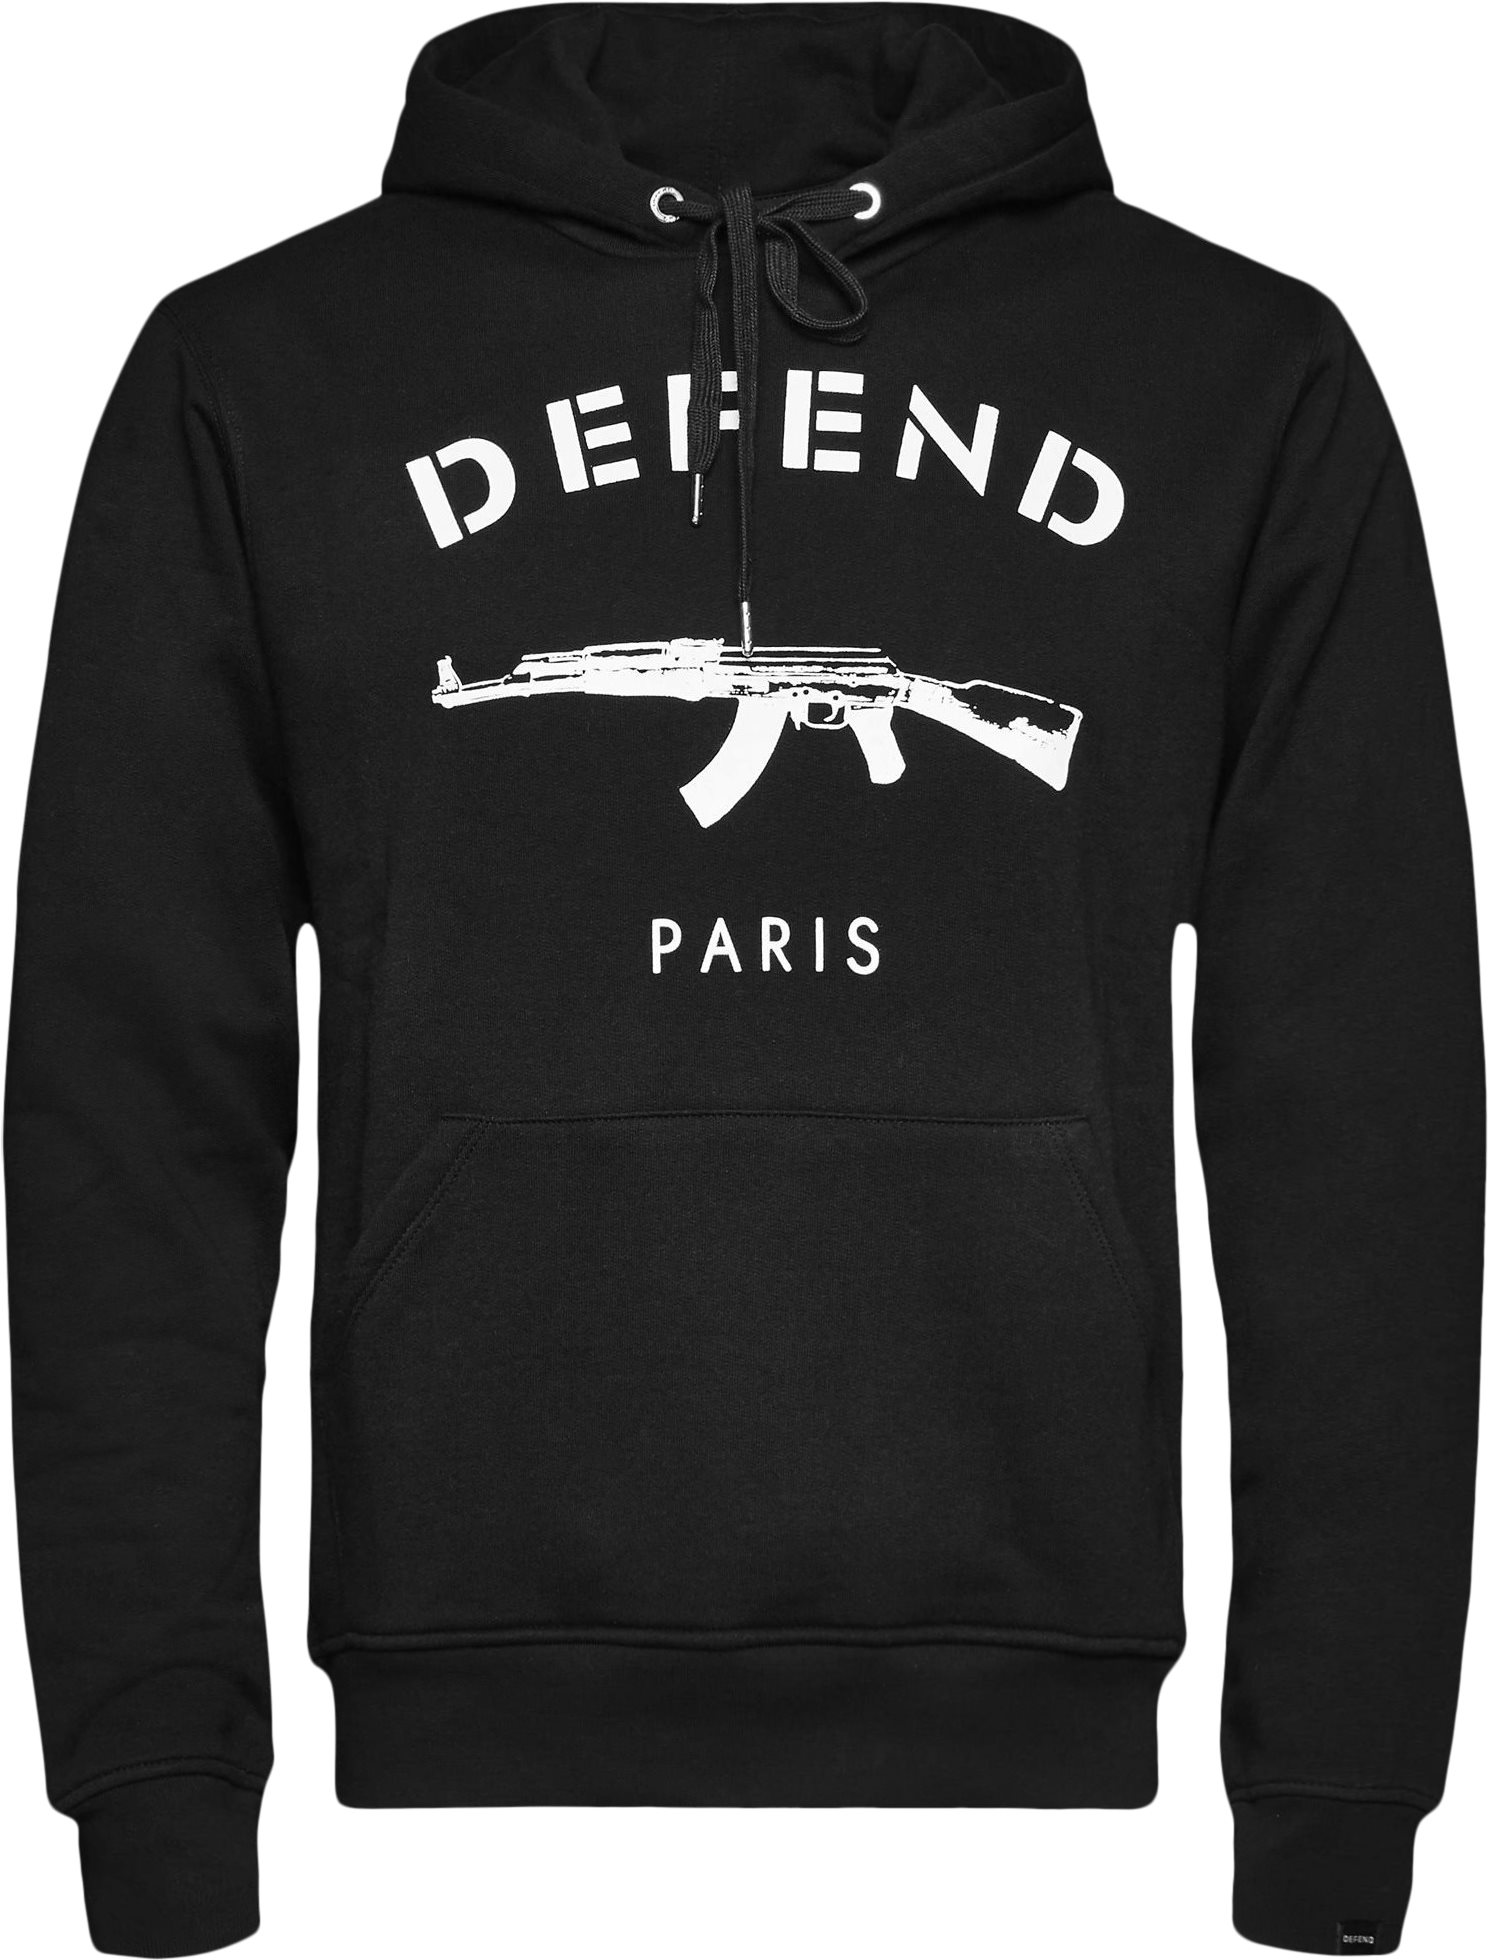 PARIS HOOD Sweatshirts SORT fra Defend Paris 399